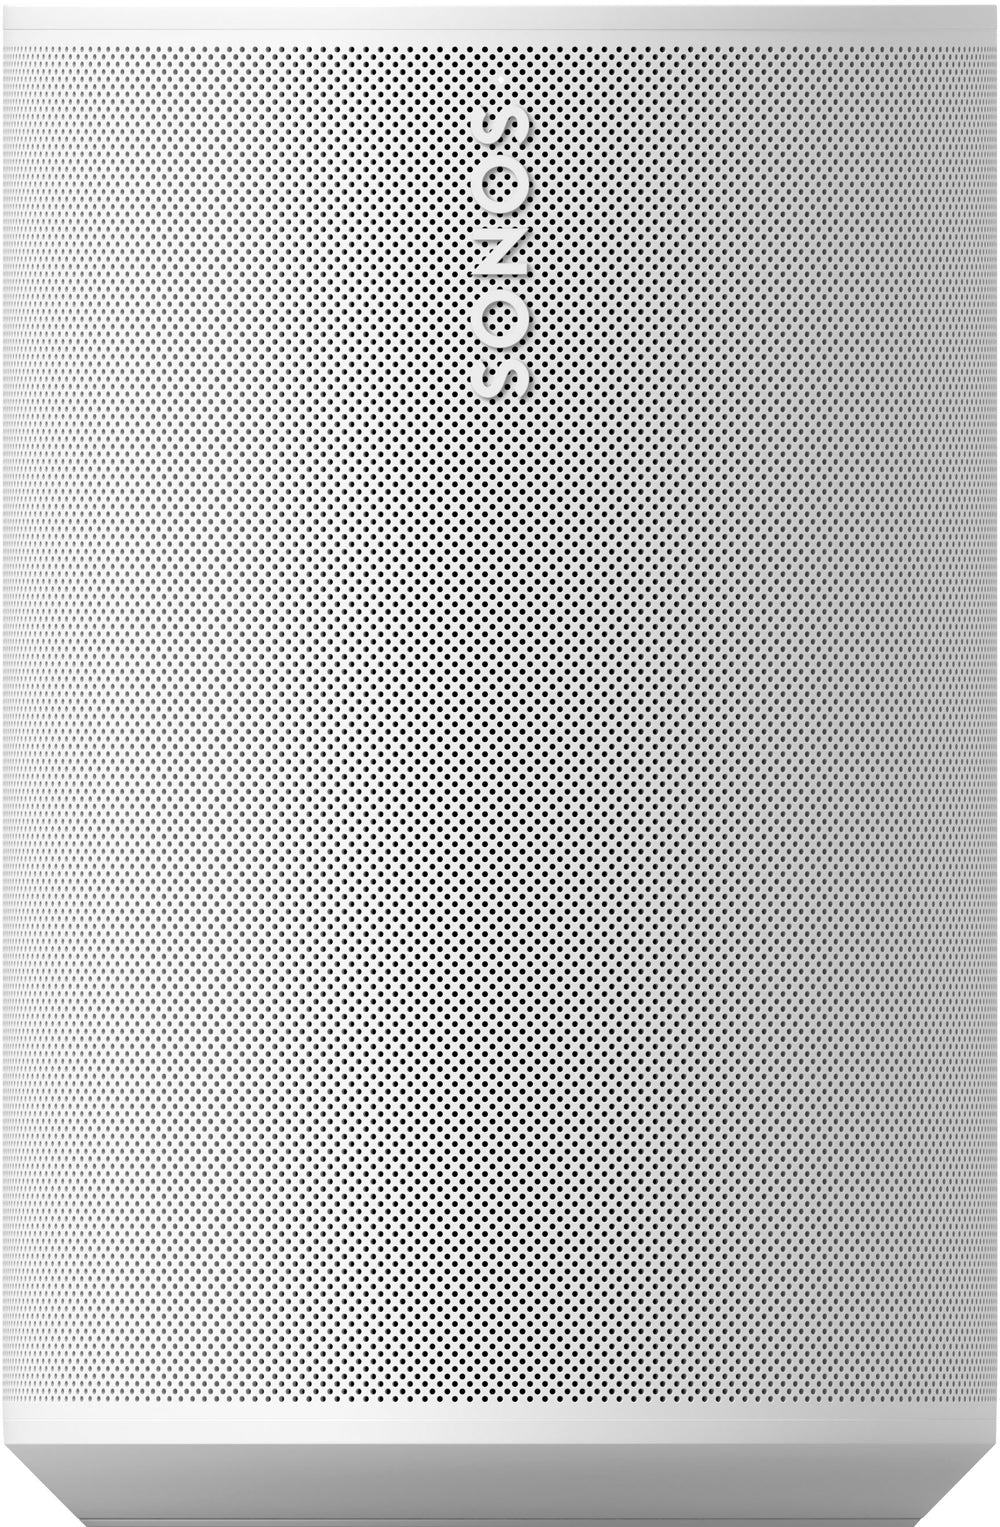 Sonos - Era 100 Speaker (Each) - White_1